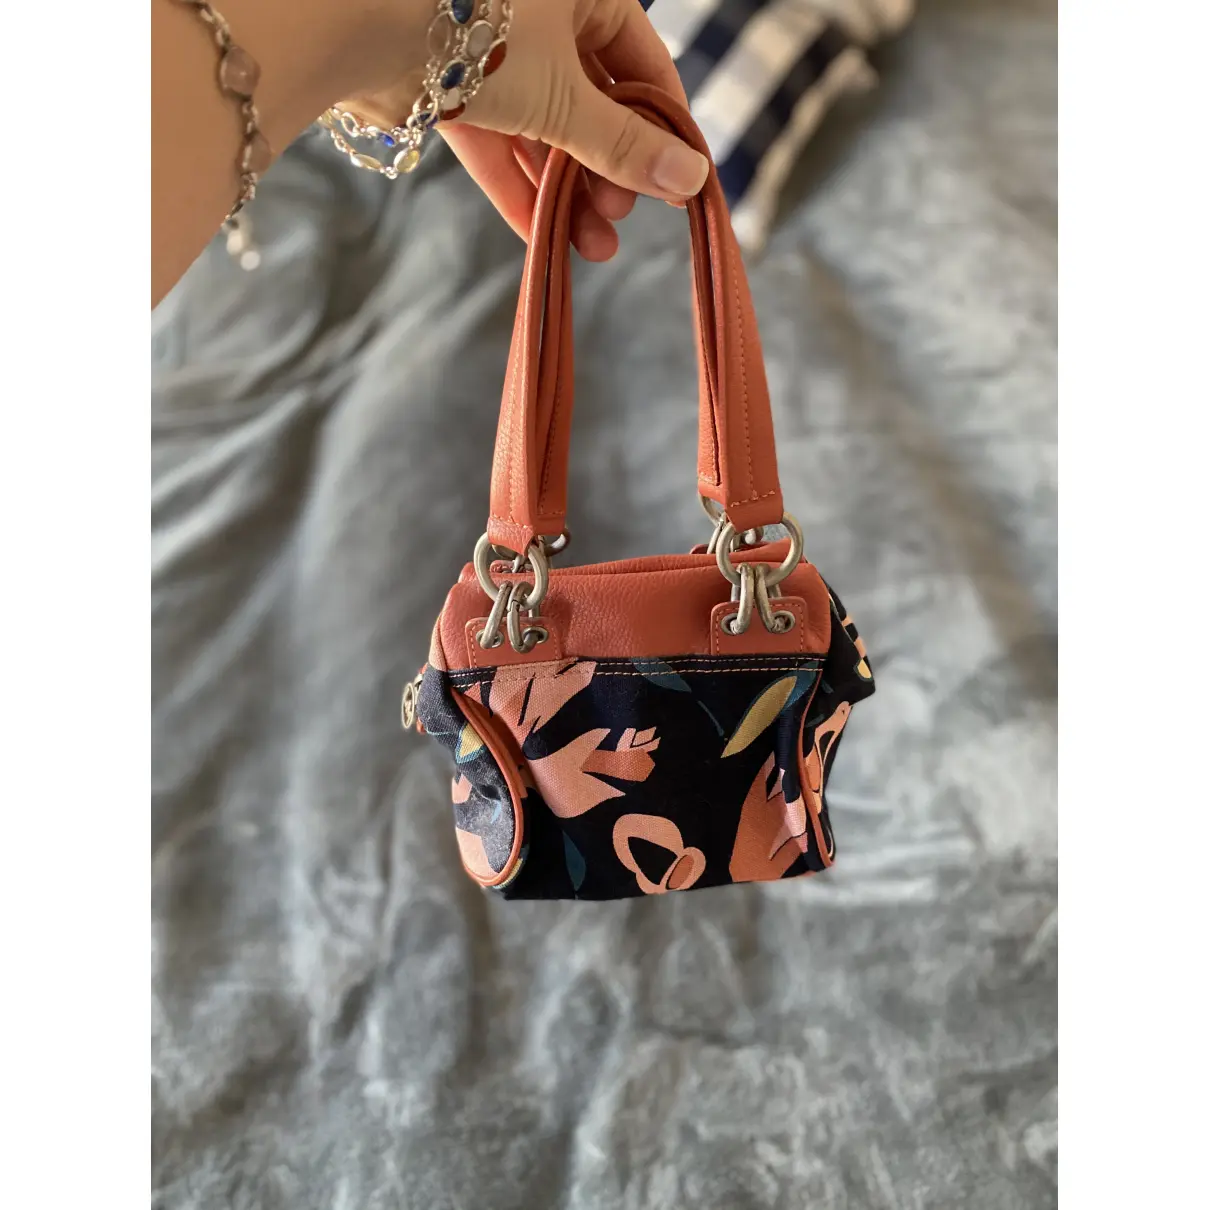 Buy Marc Jacobs Cloth handbag online